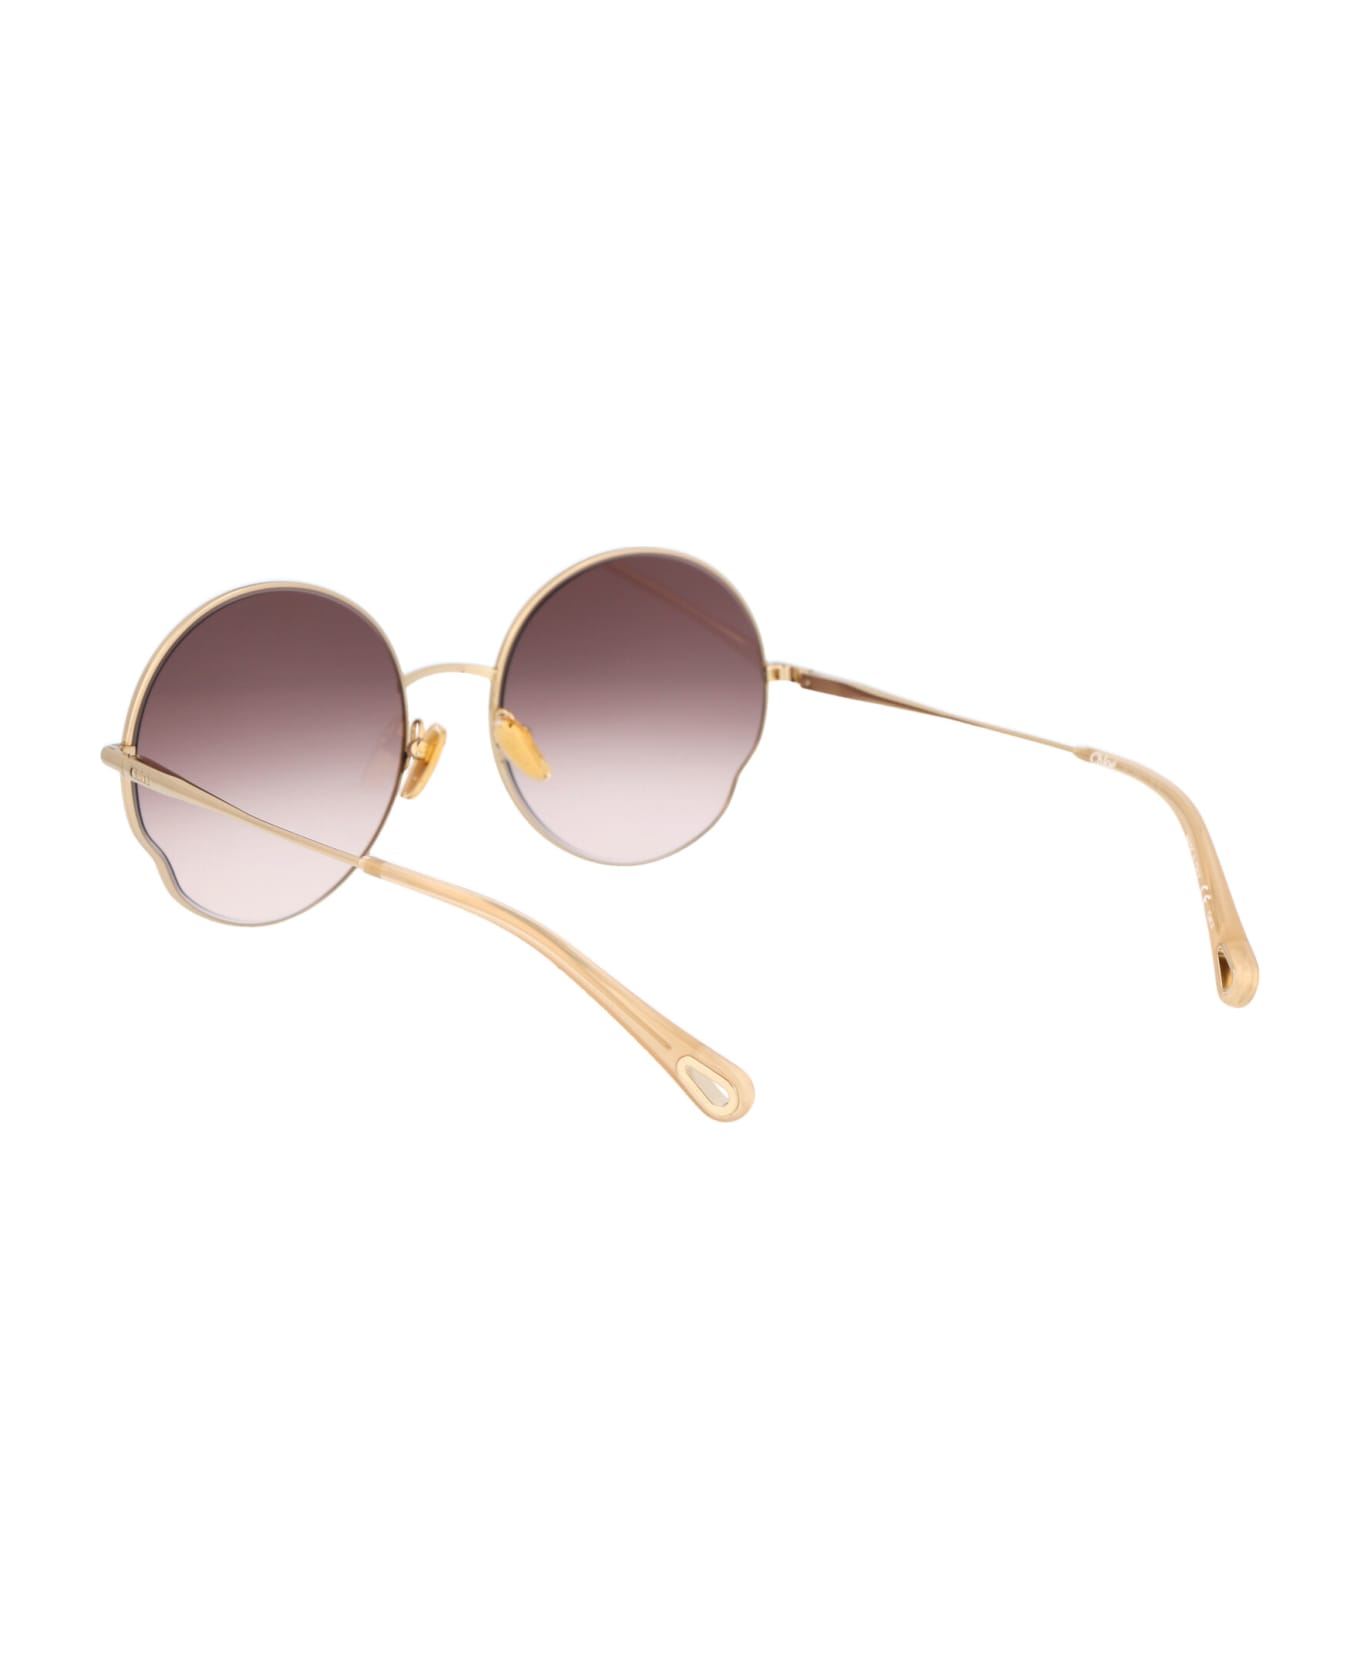 Chloé Eyewear Ch0095s Sunglasses - 005 GOLD GOLD BROWN